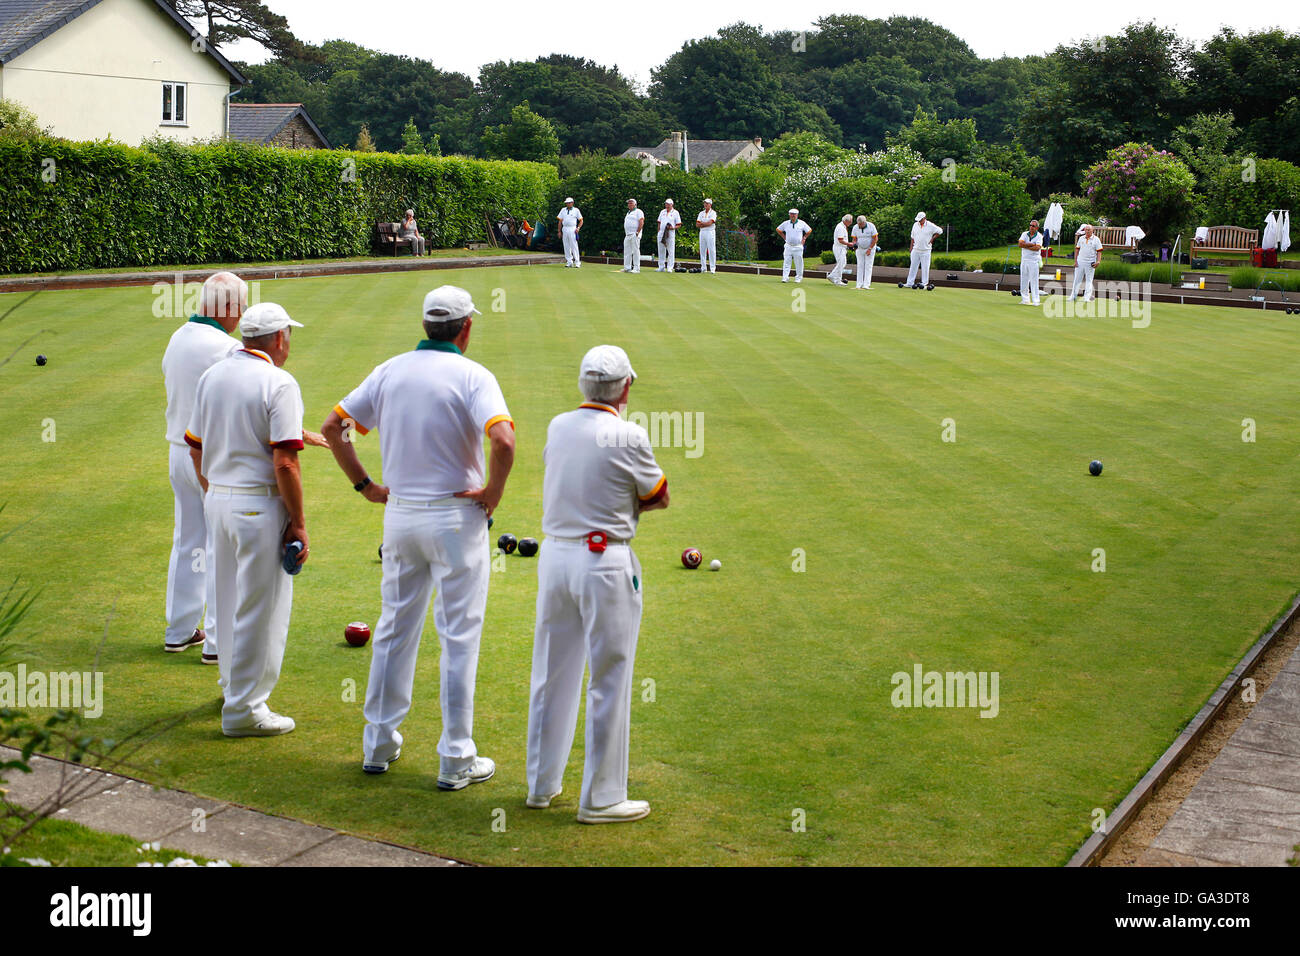 Players enjoying a match at Stoke Fleming Bowls Club in Devon, UK. Stock Photo